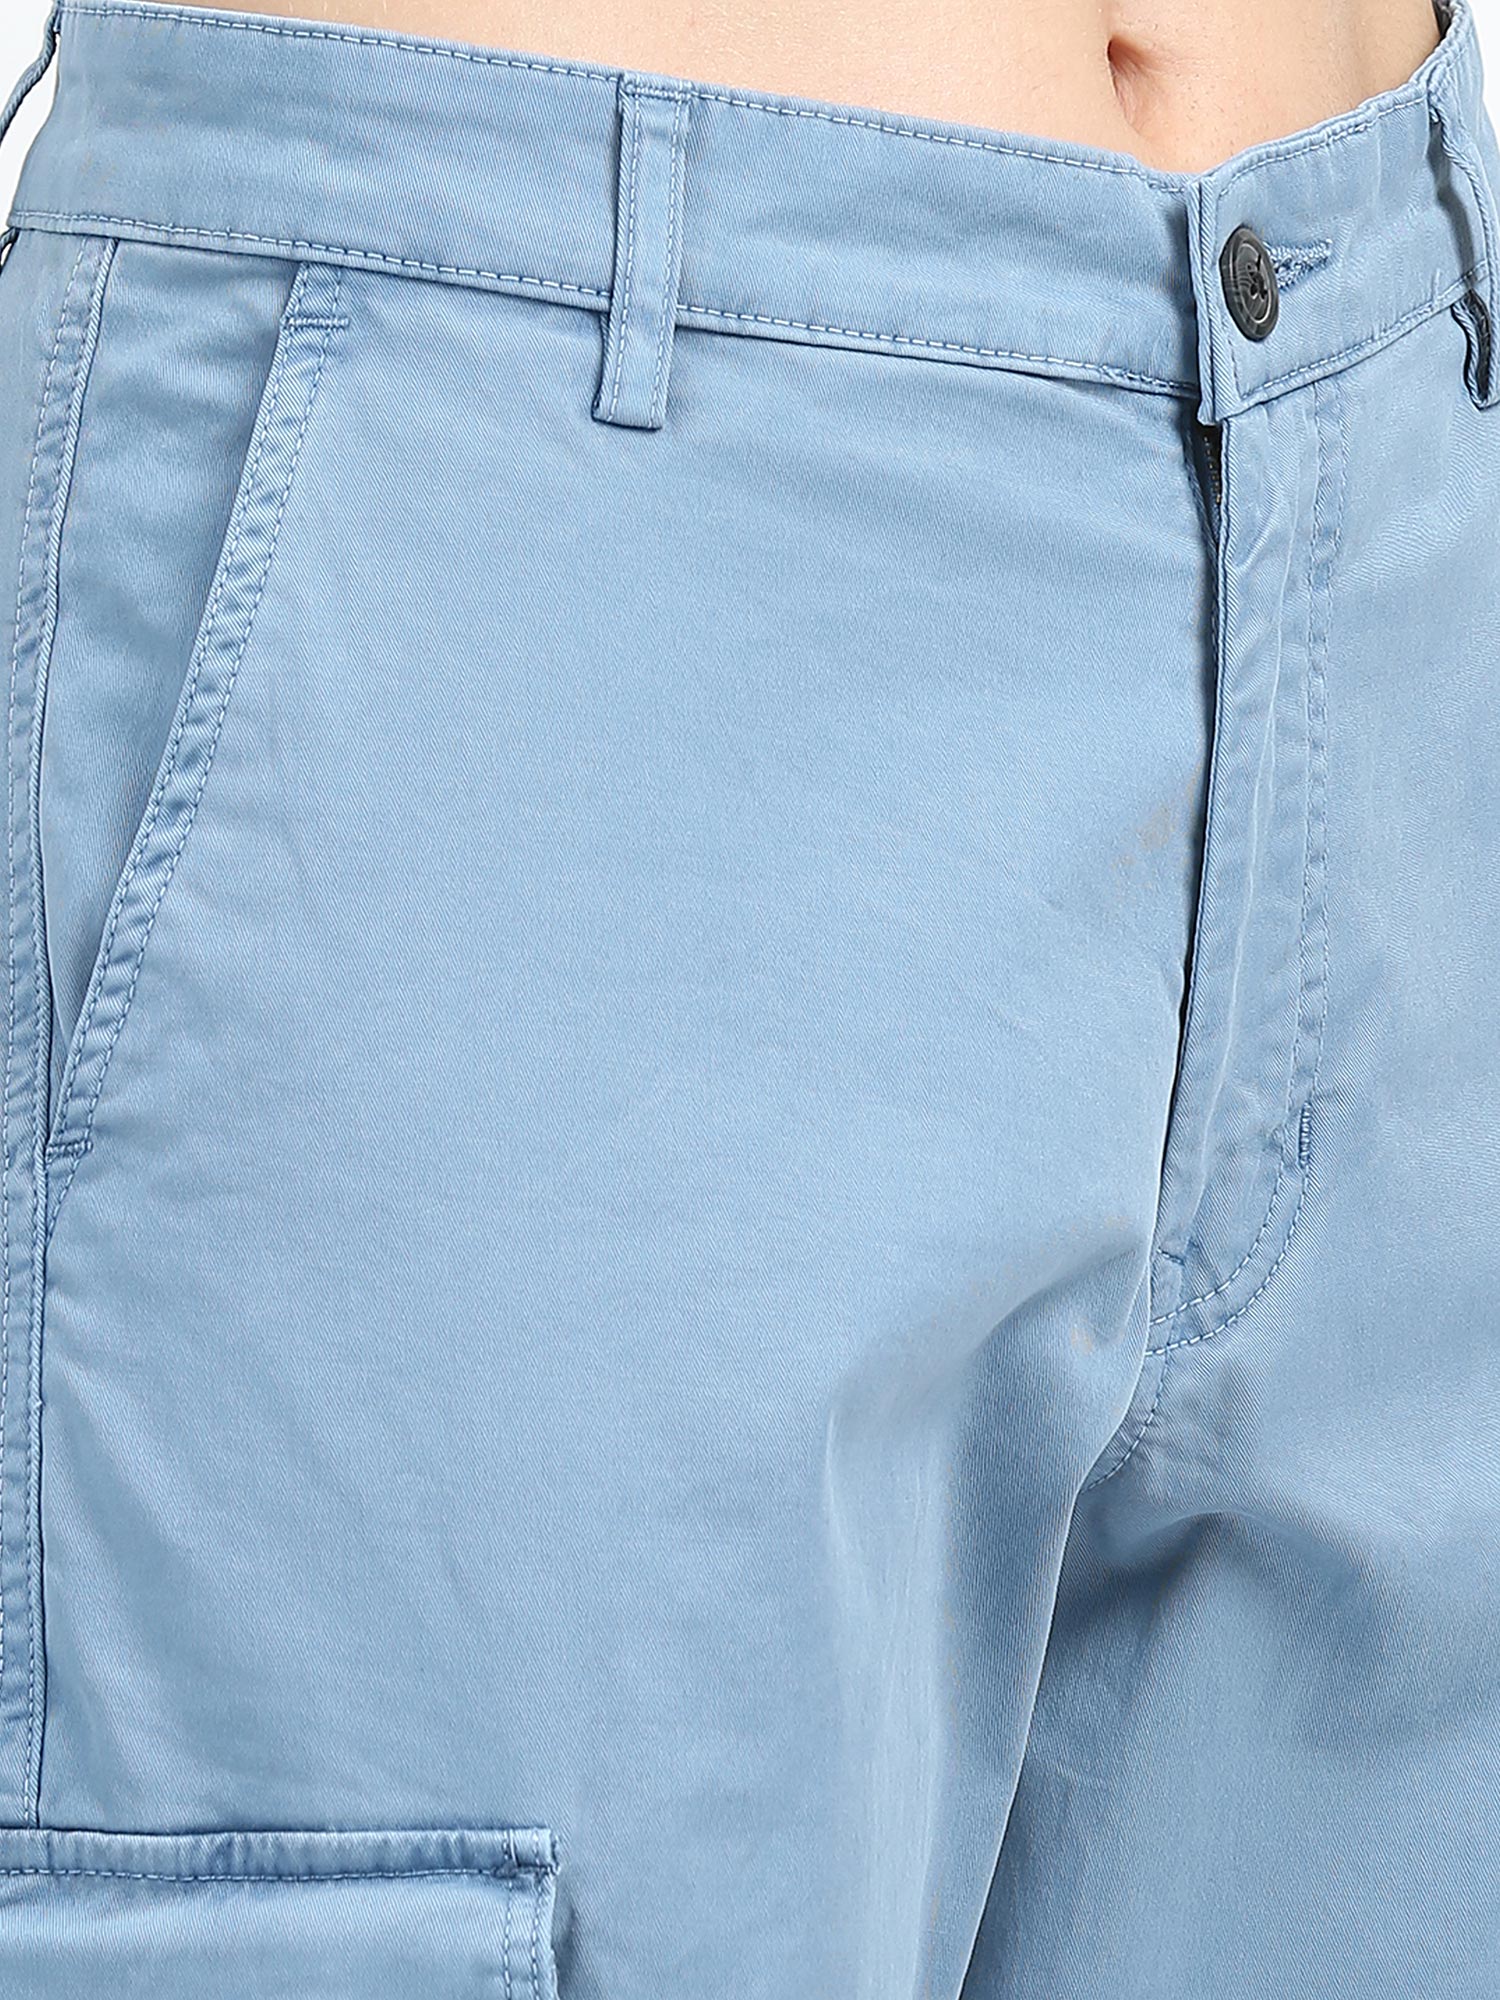 SIKSILK PANTS - Cargo trousers - light blue - Zalando.de